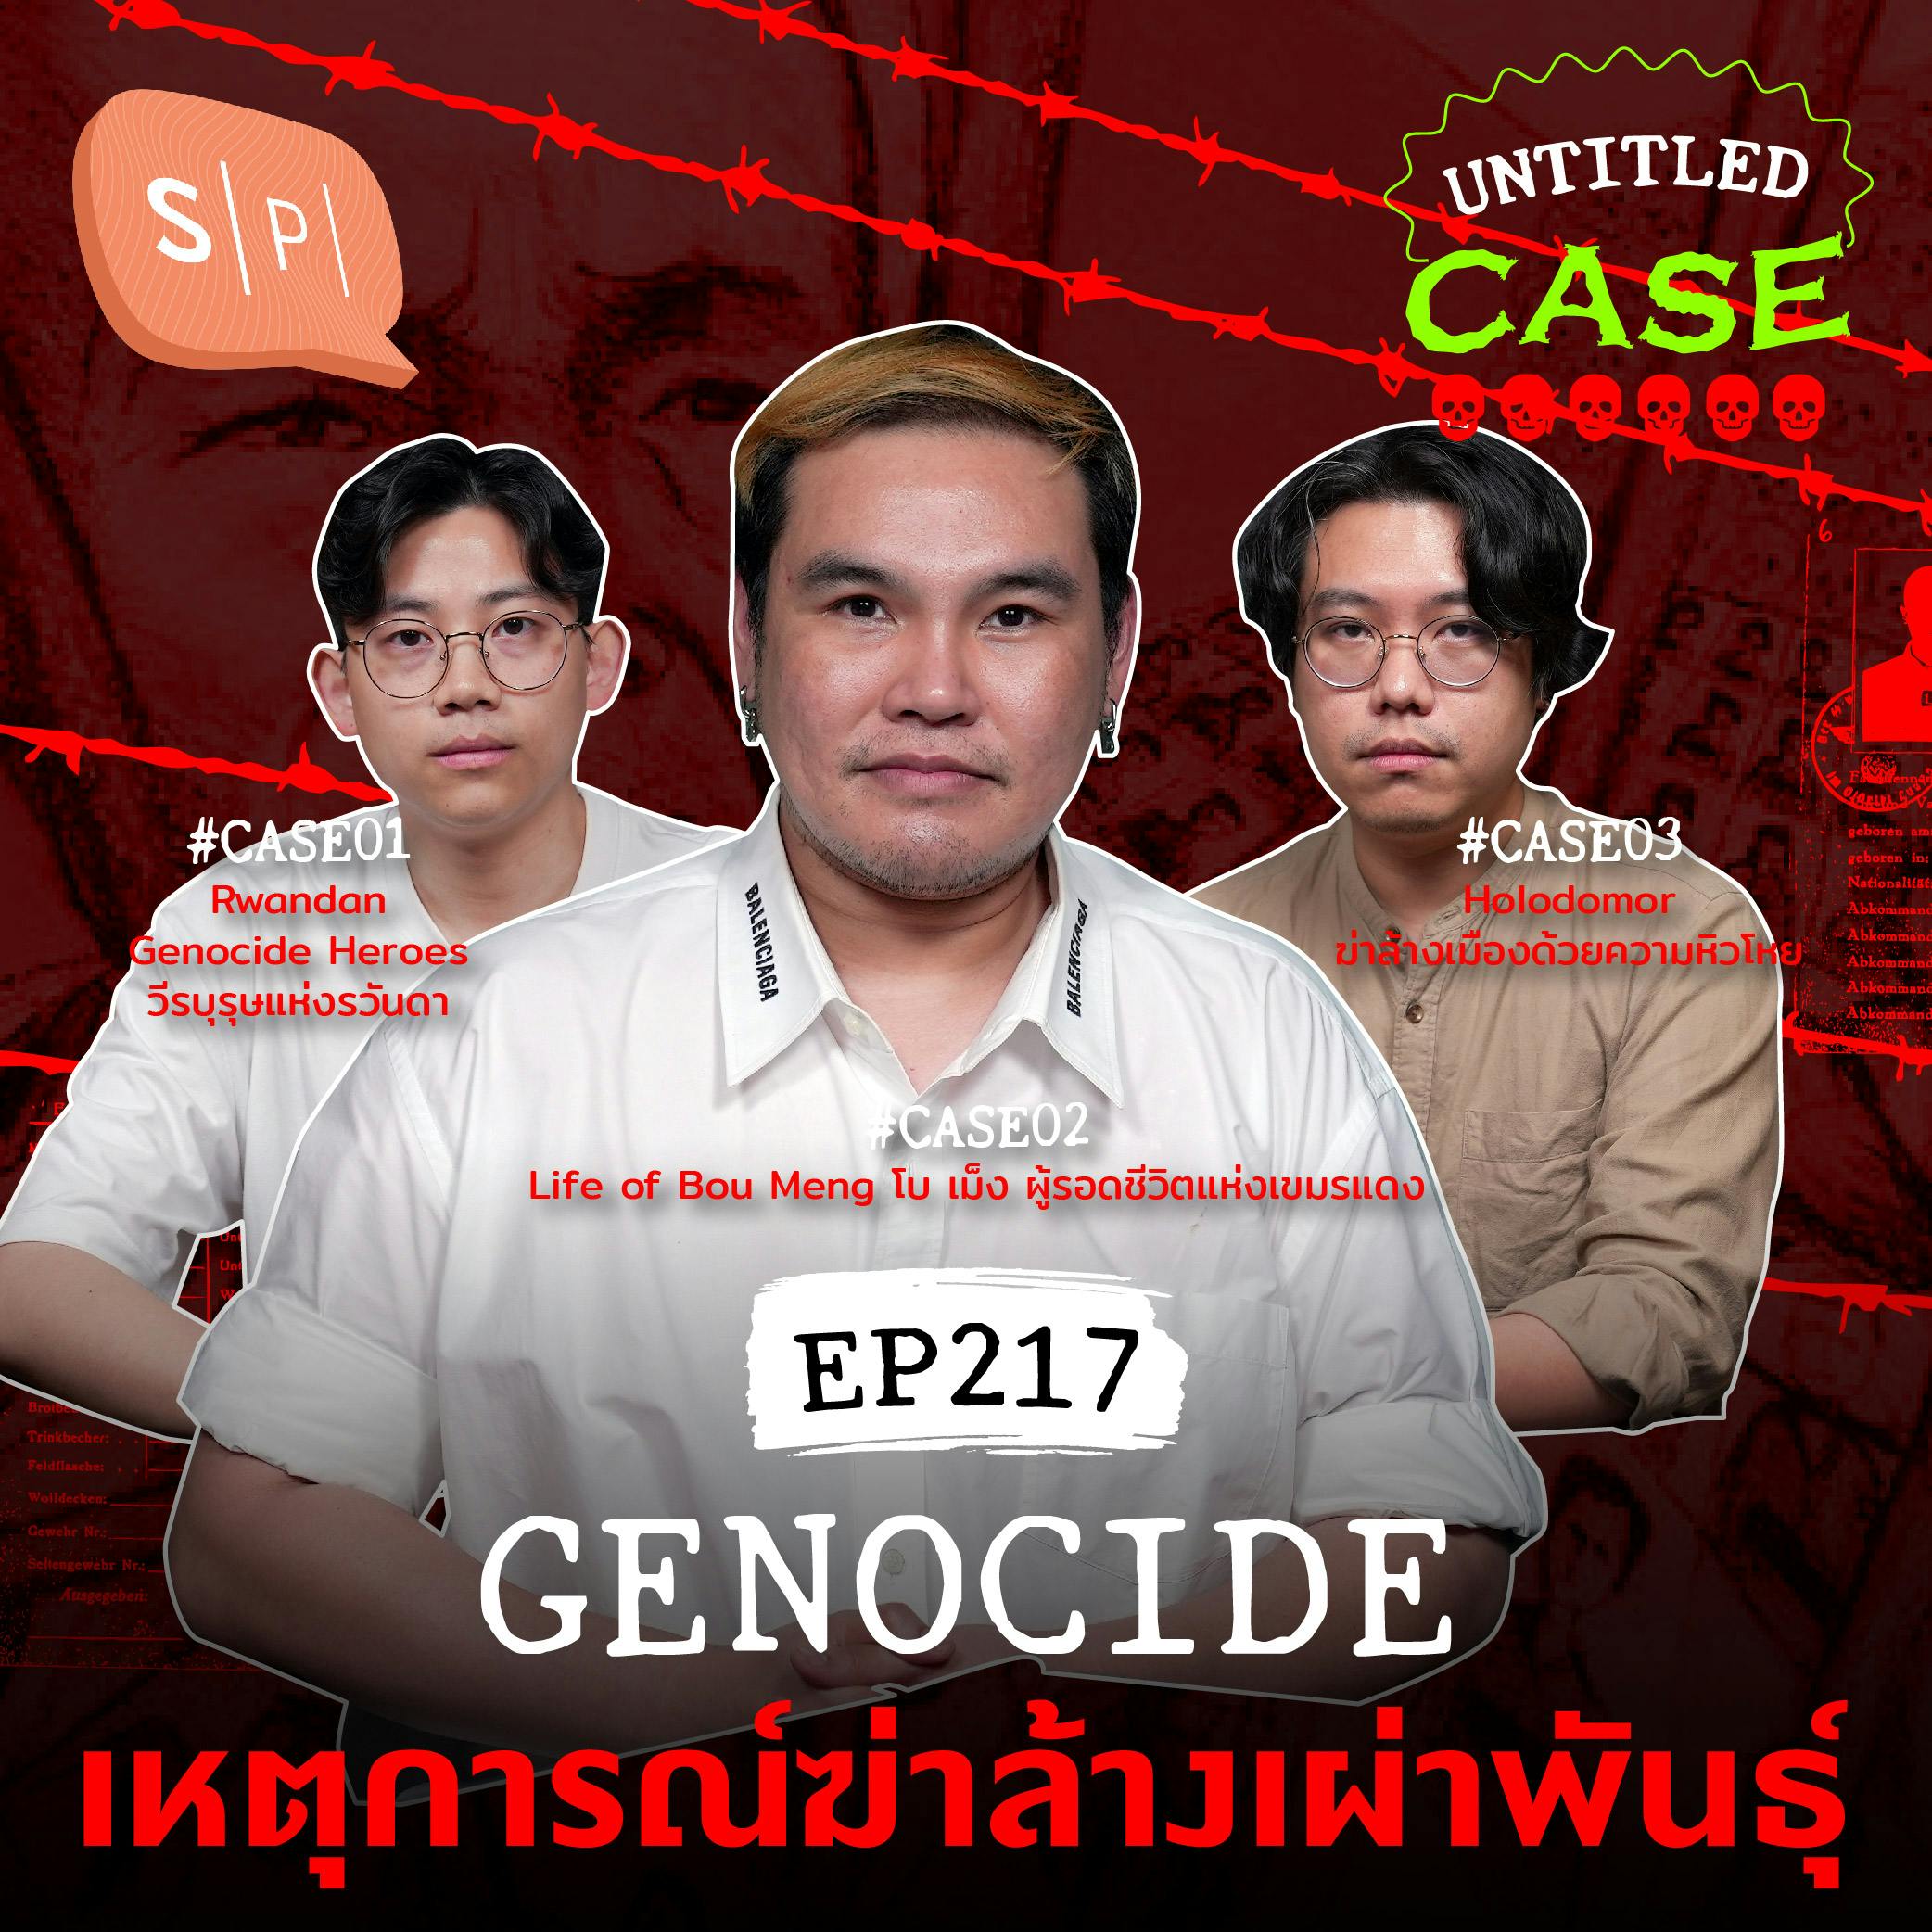 Genocide เหตุการณ์ฆ่าล้างเผ่าพันธุ์ | Untitled Case EP217